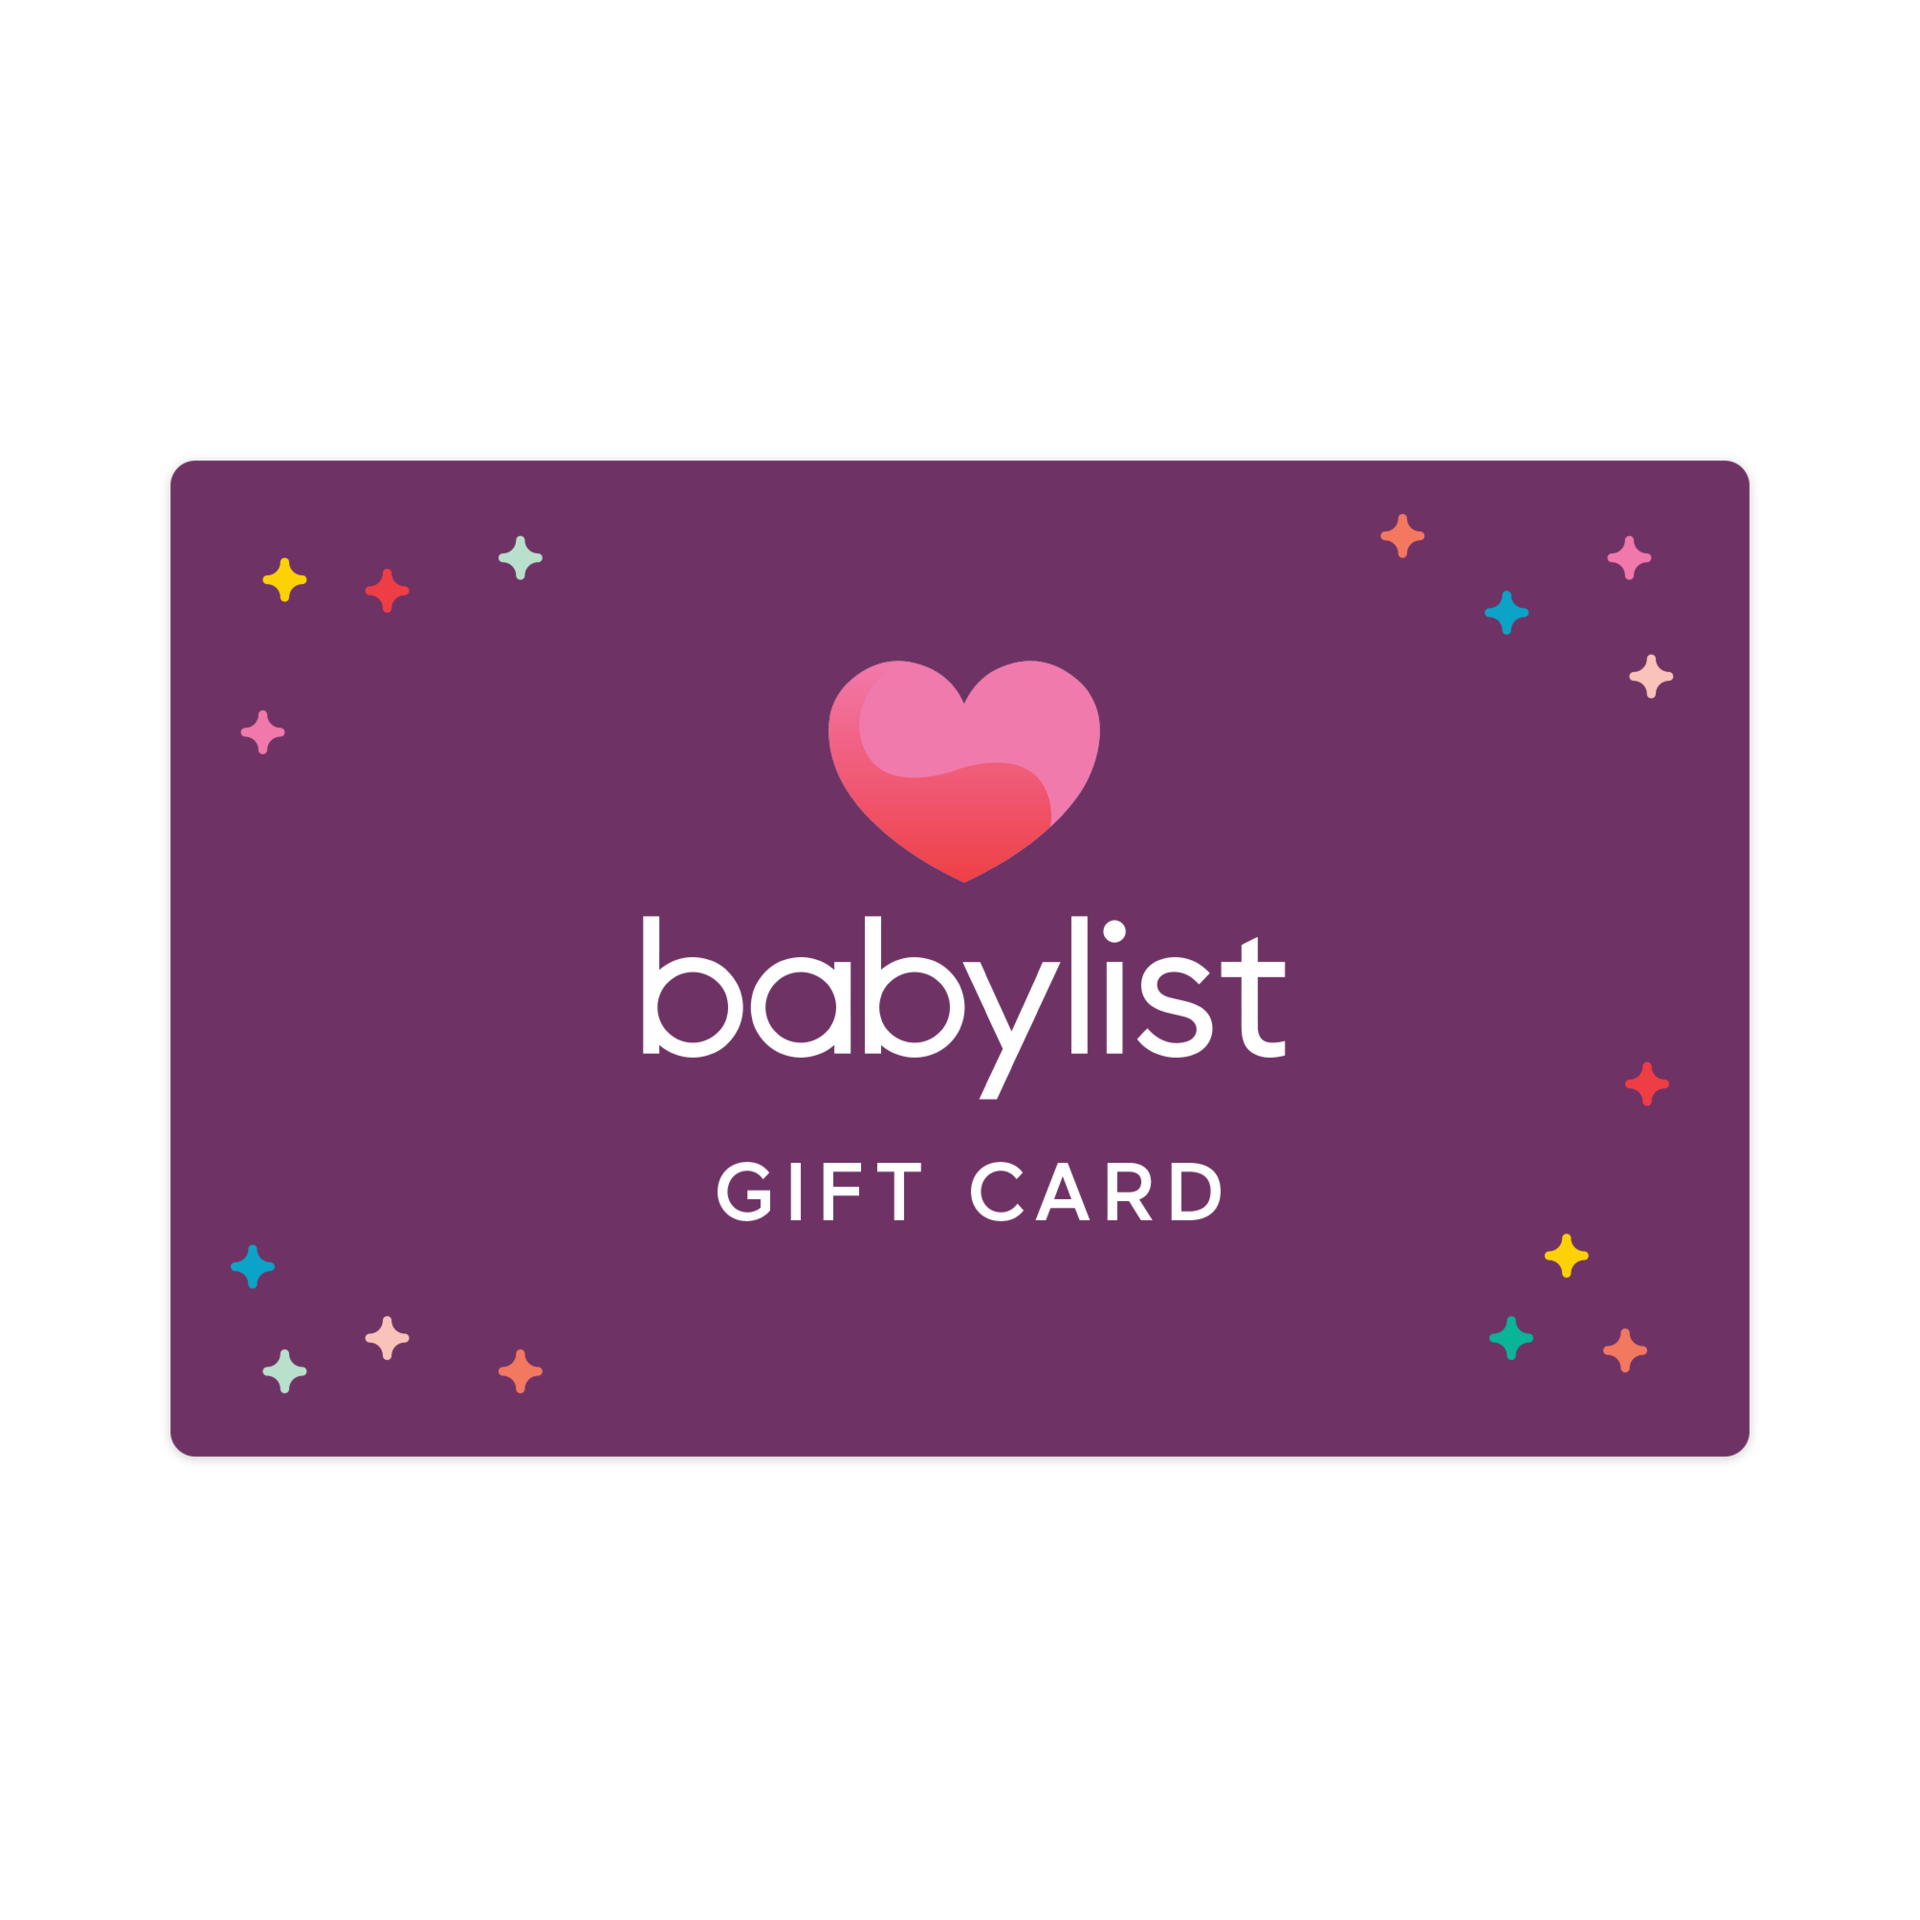 babylist stores